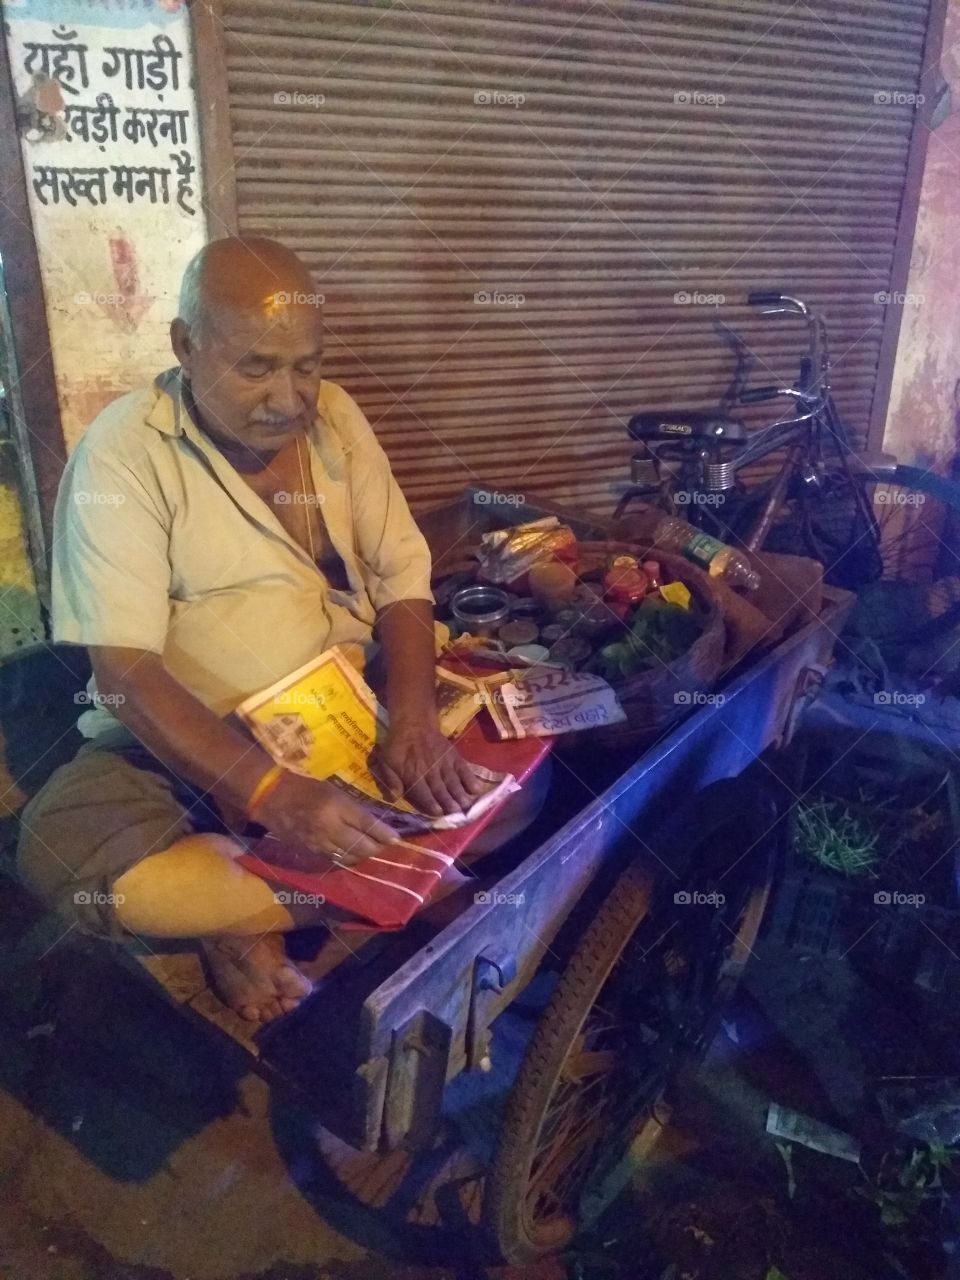 beetleleaf seller on a rikhshaw